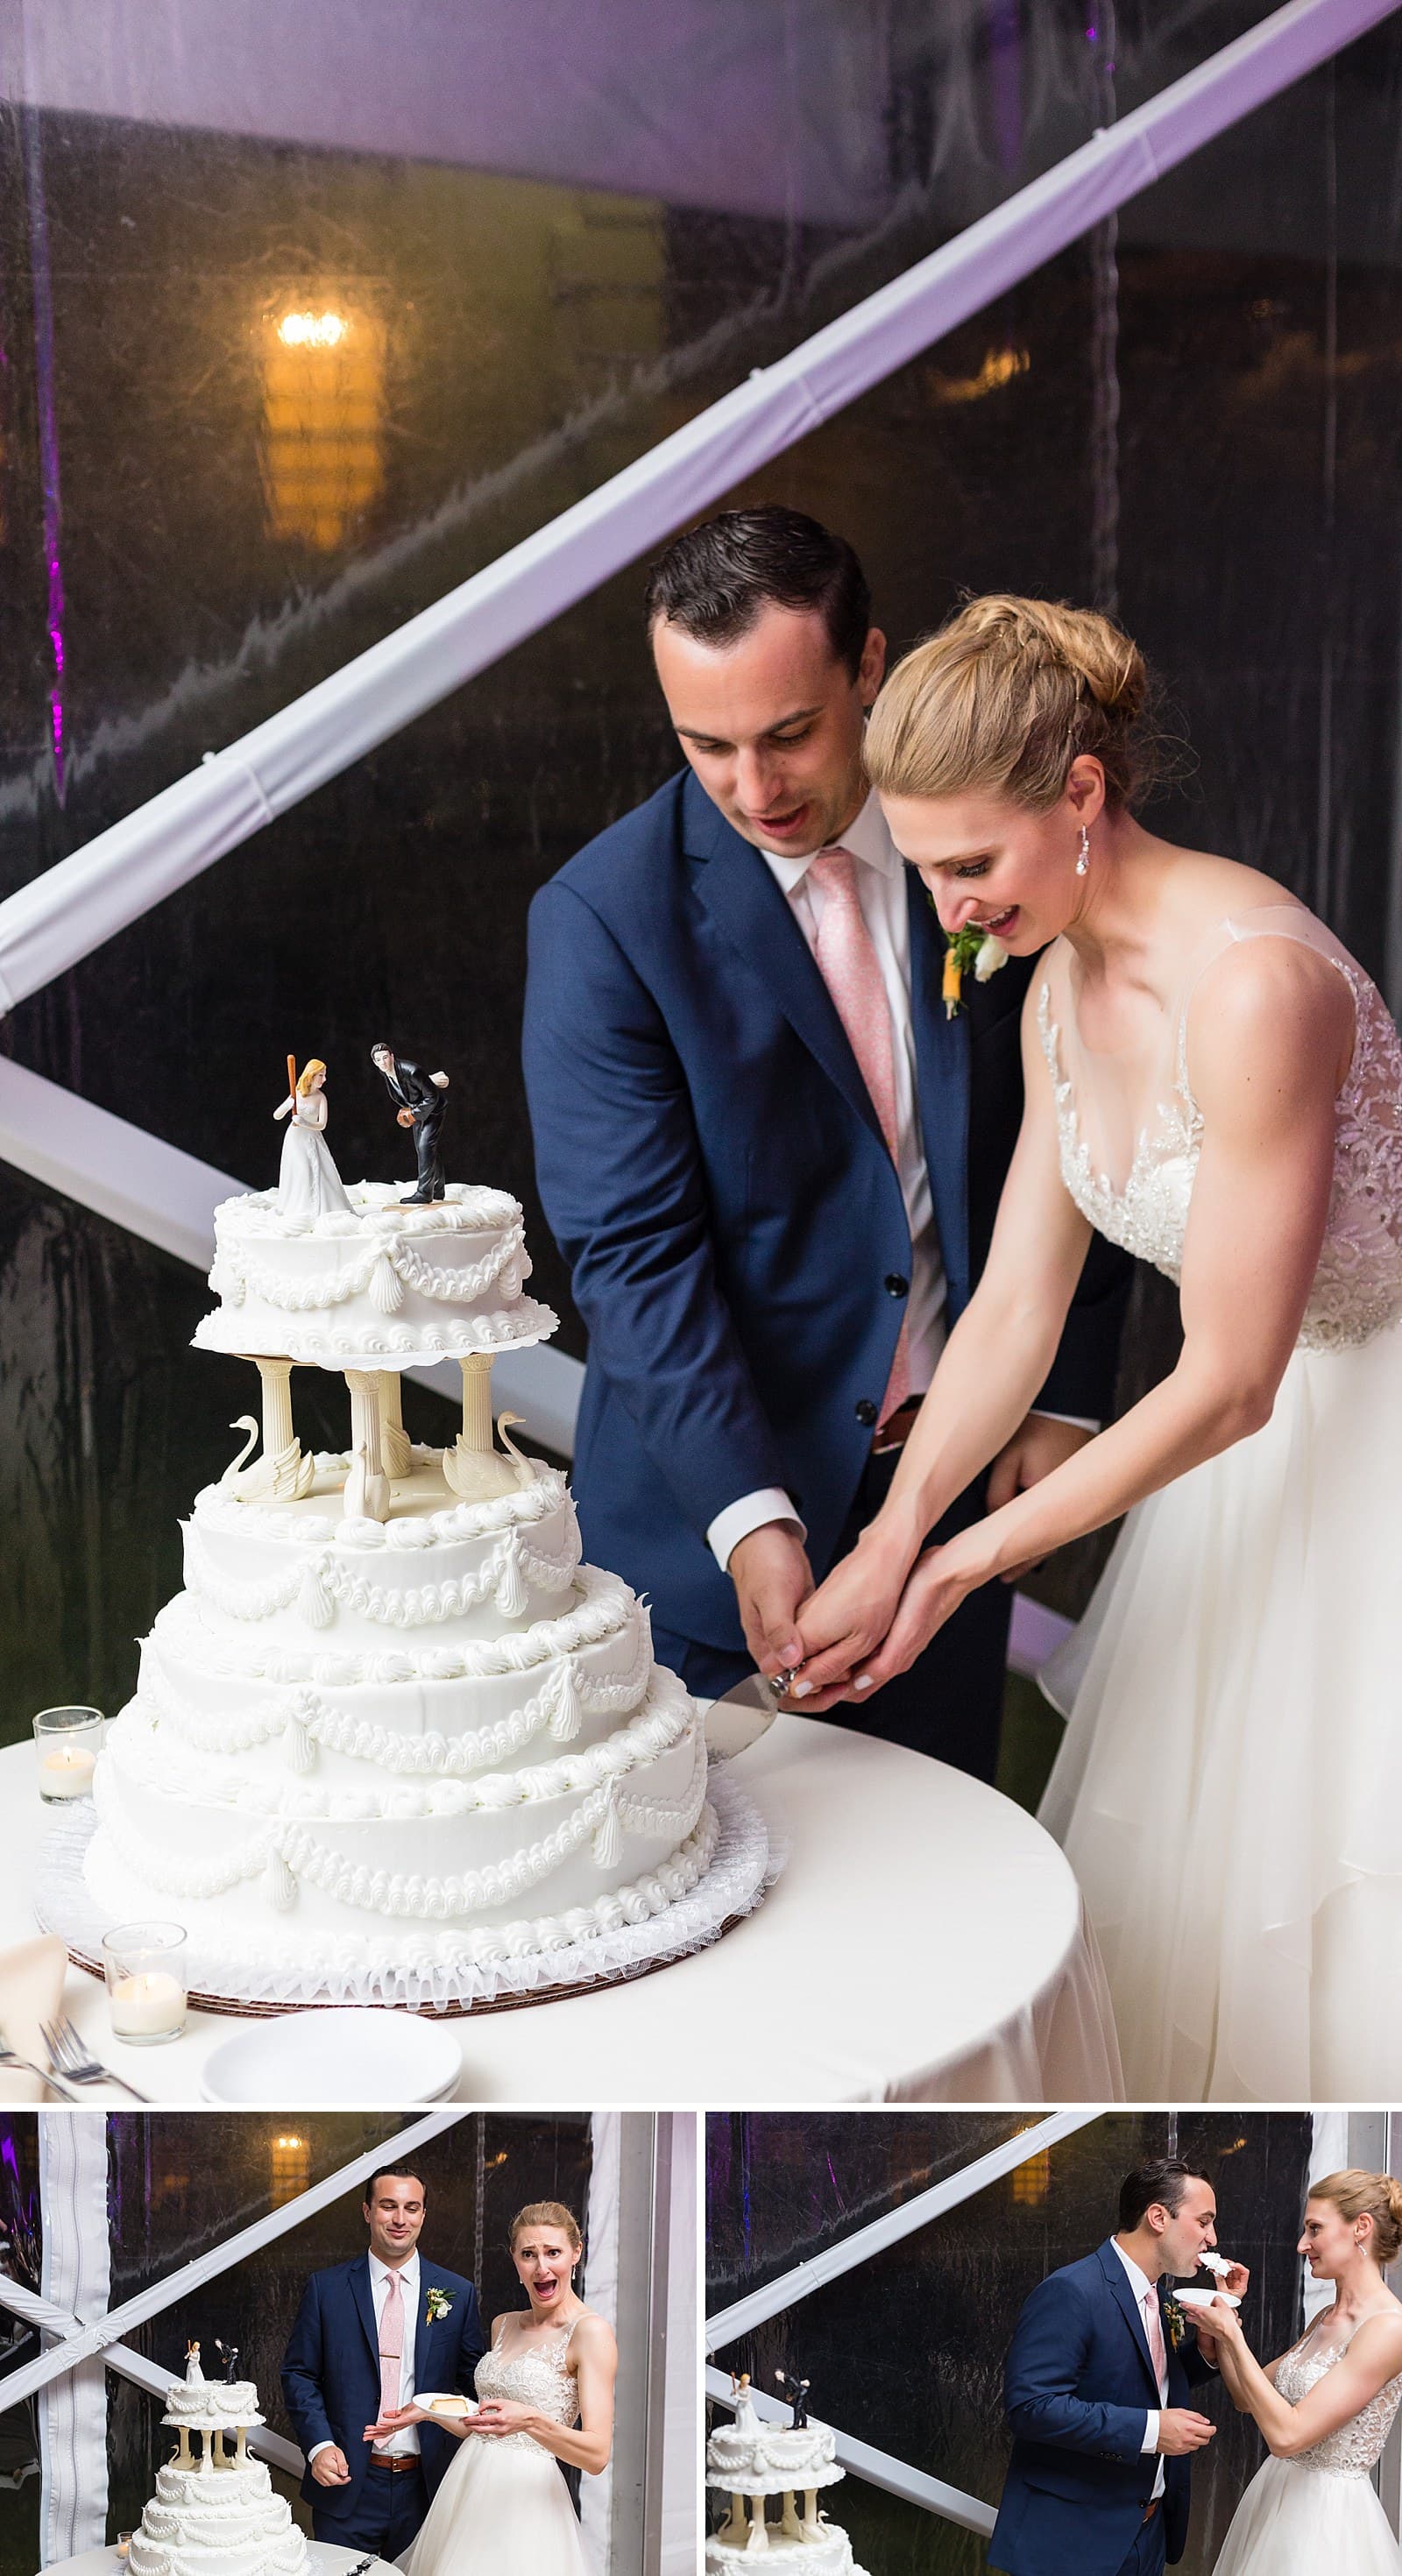 Bride and groom cutting wedding cake, bride feeding groom wedding cake, Baseball player cake toppers